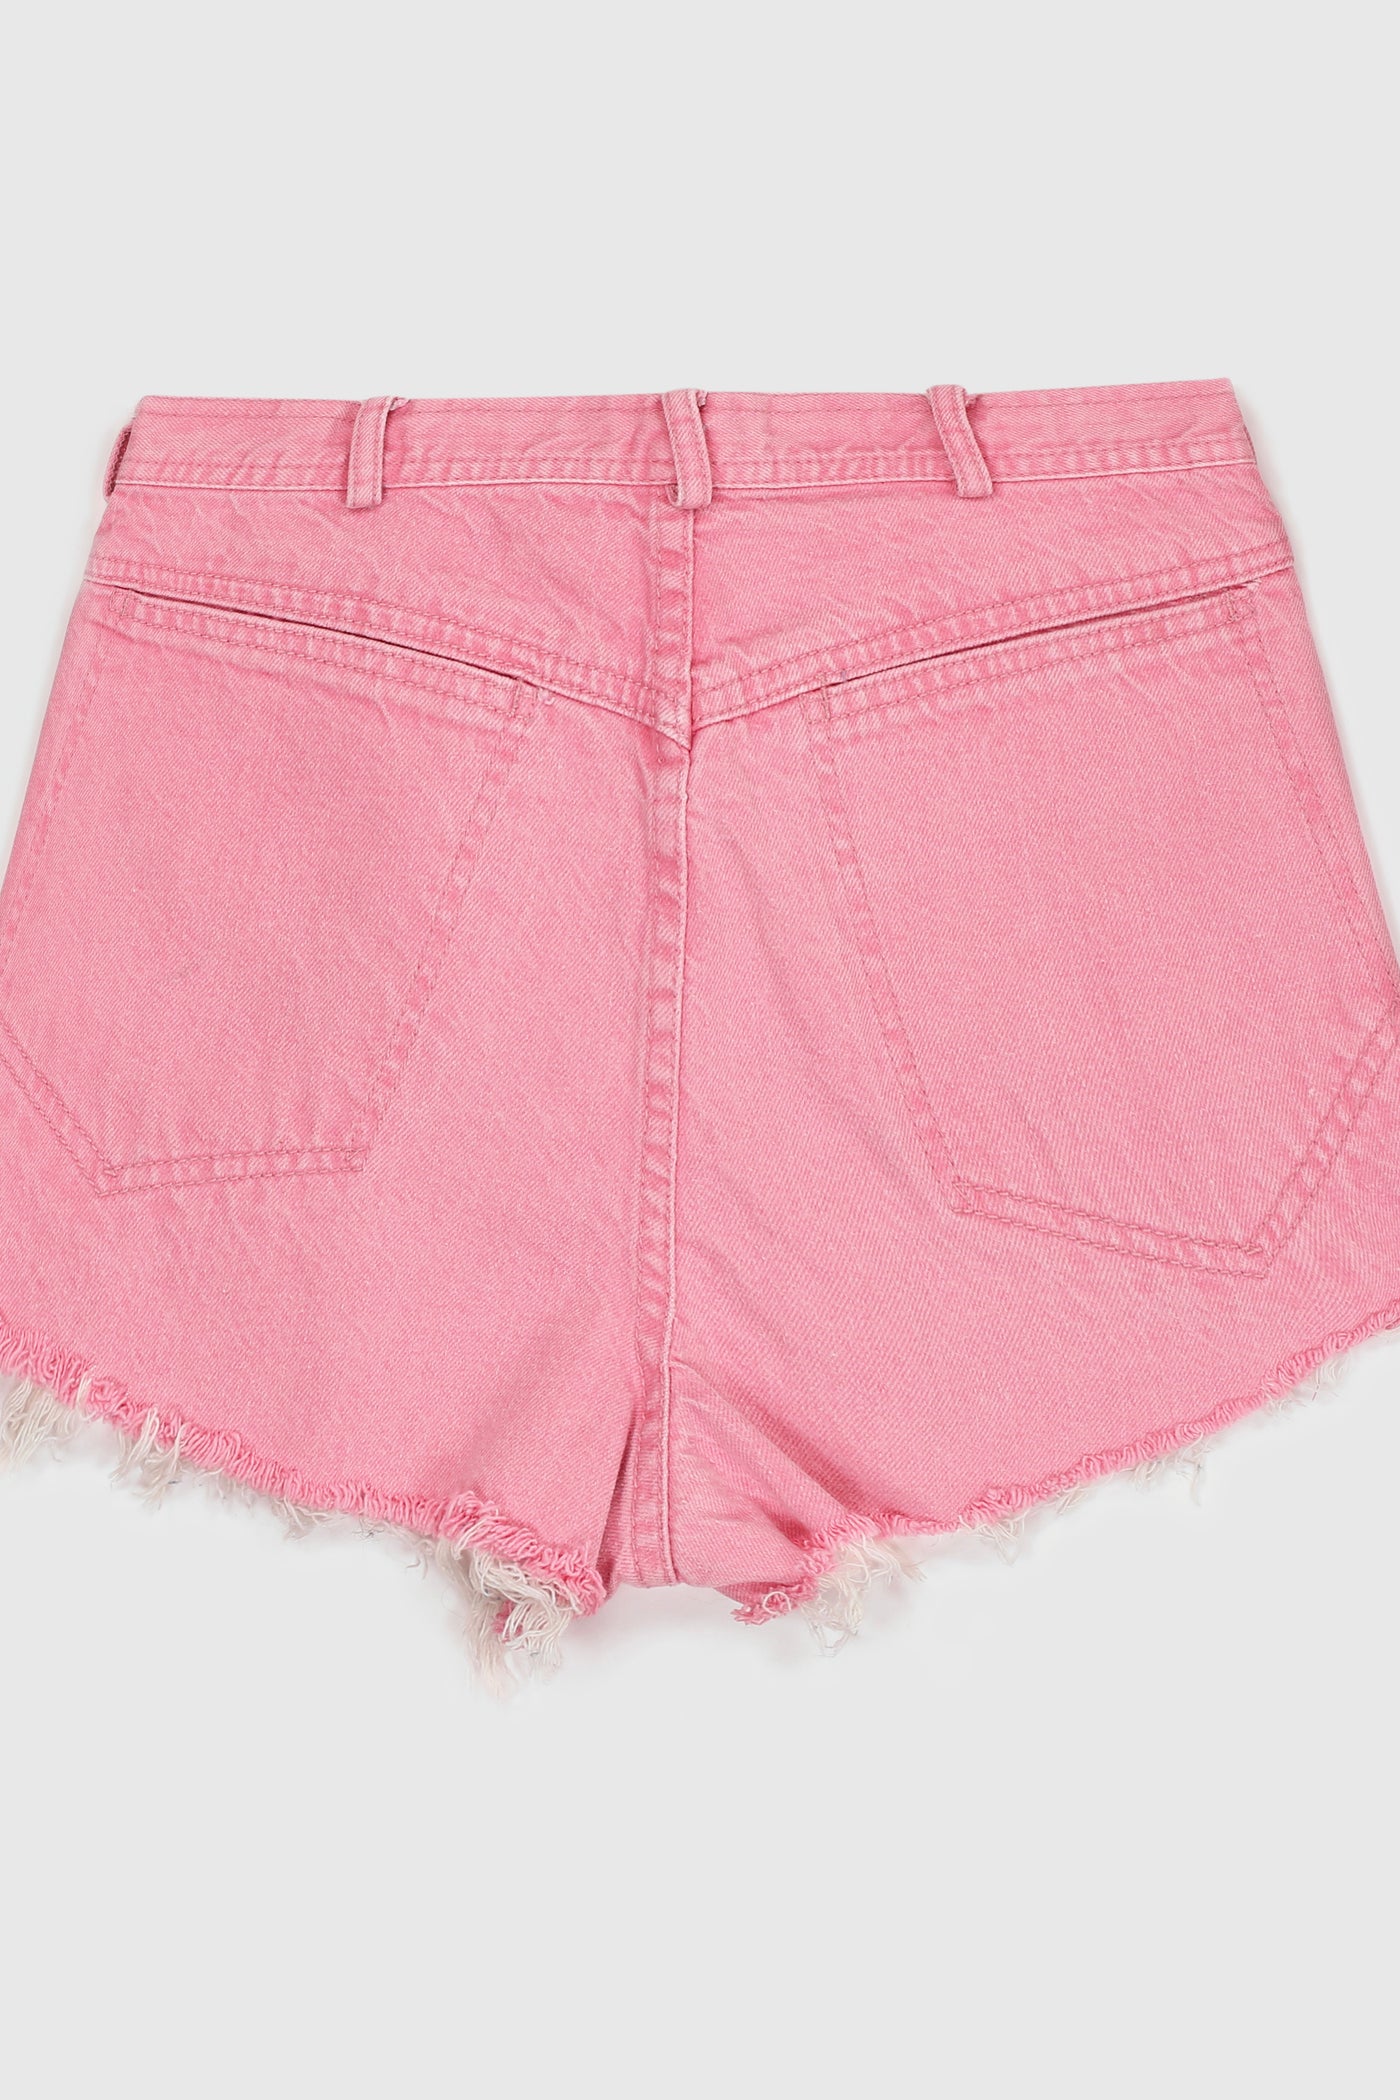 Vintage Pink Distressed Shorts